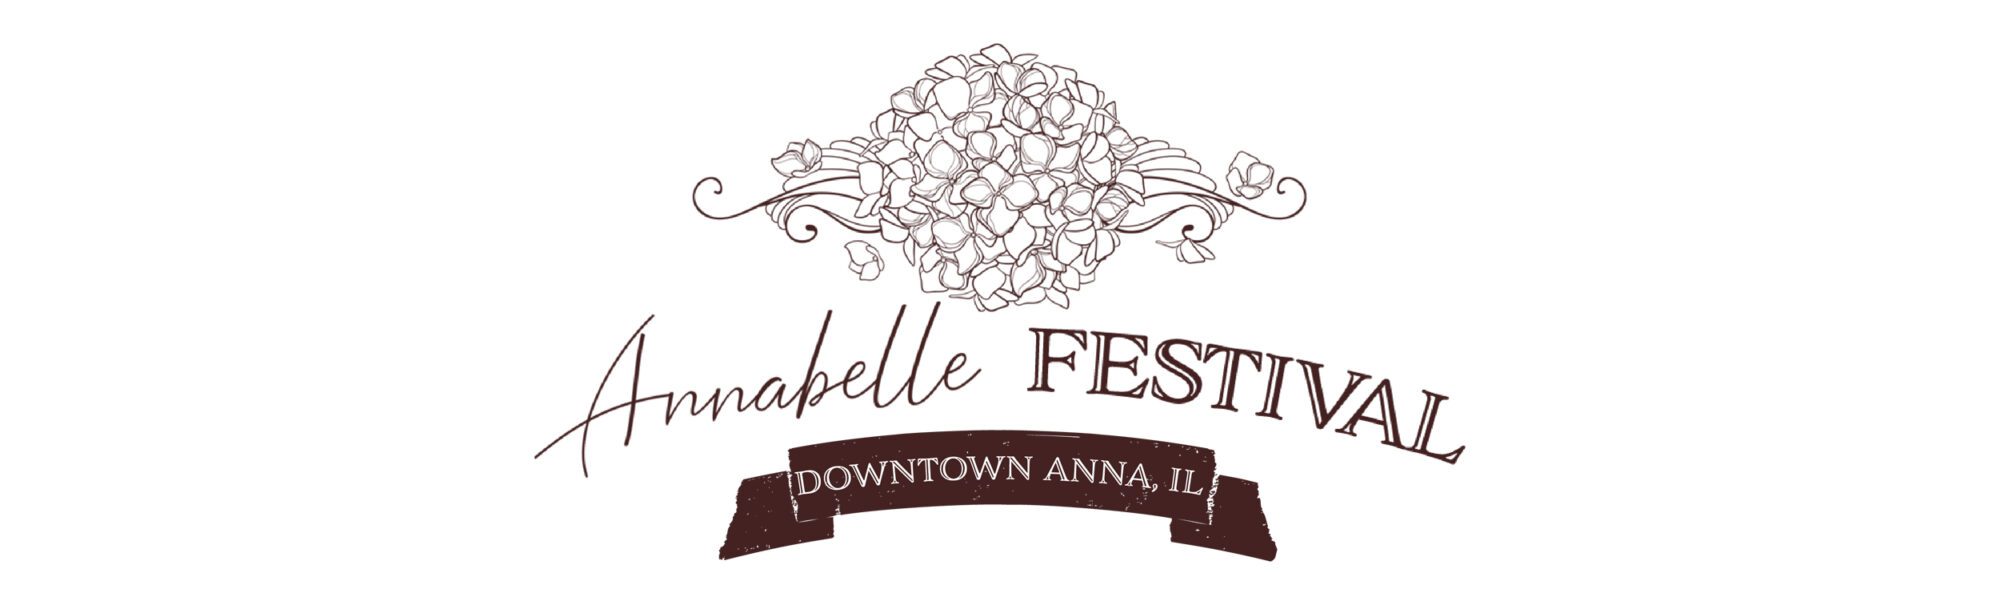 annabelle festival header image with logo